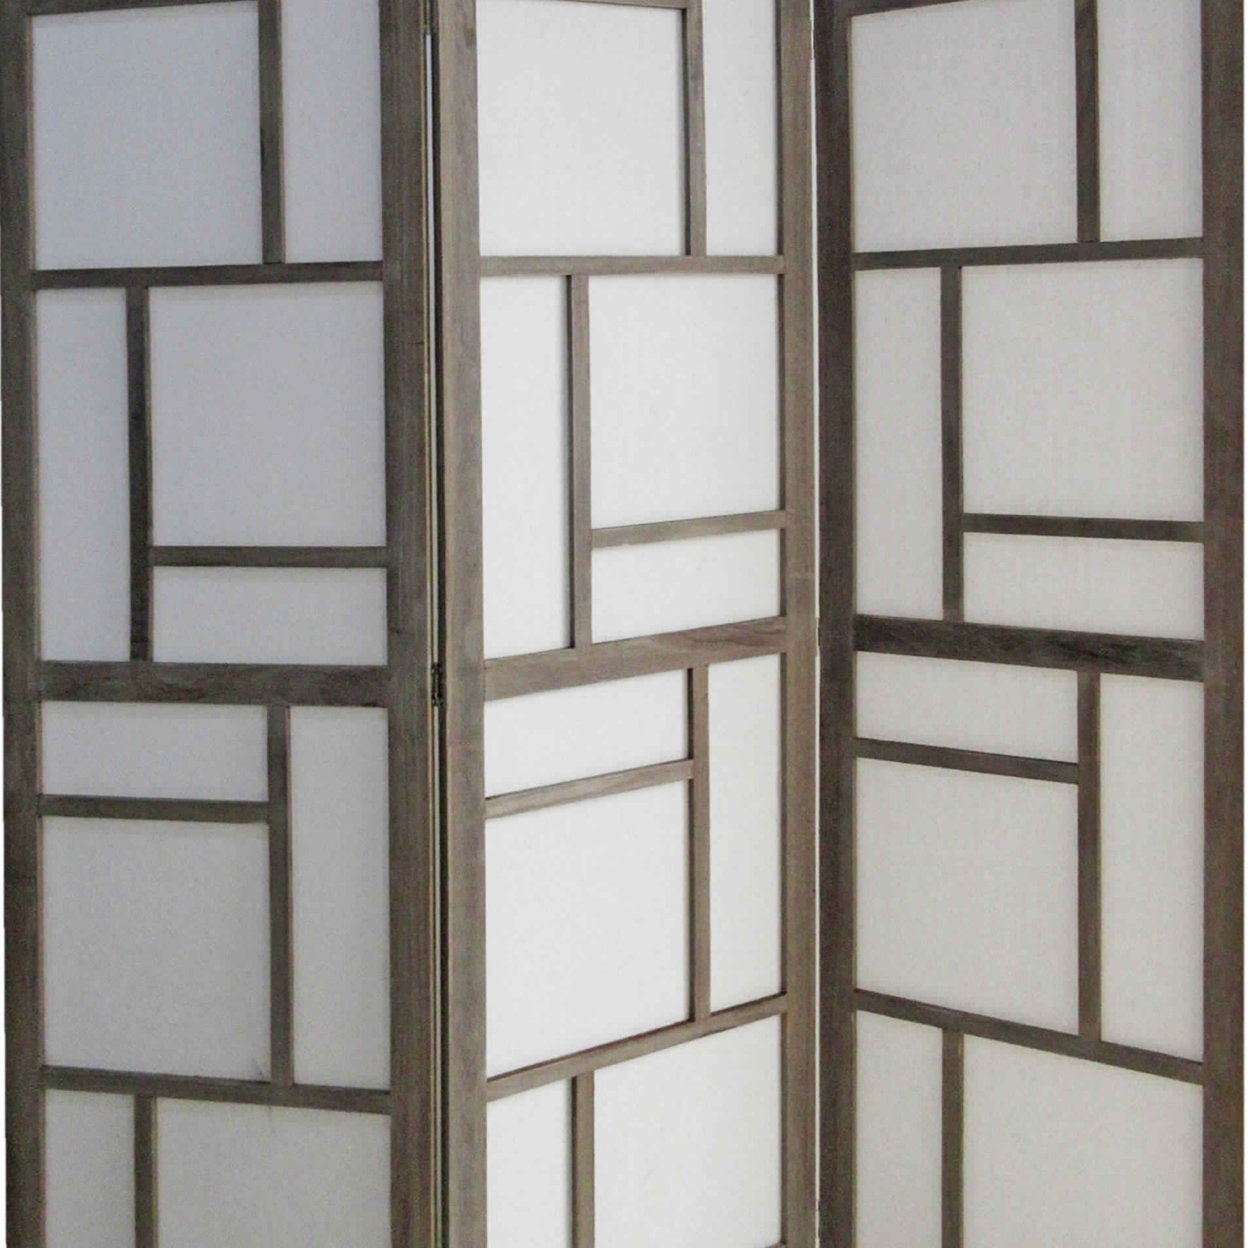 Contemporary 3 Panel Wooden Screen With Geometrical Designs, Gray- Saltoro Sherpi